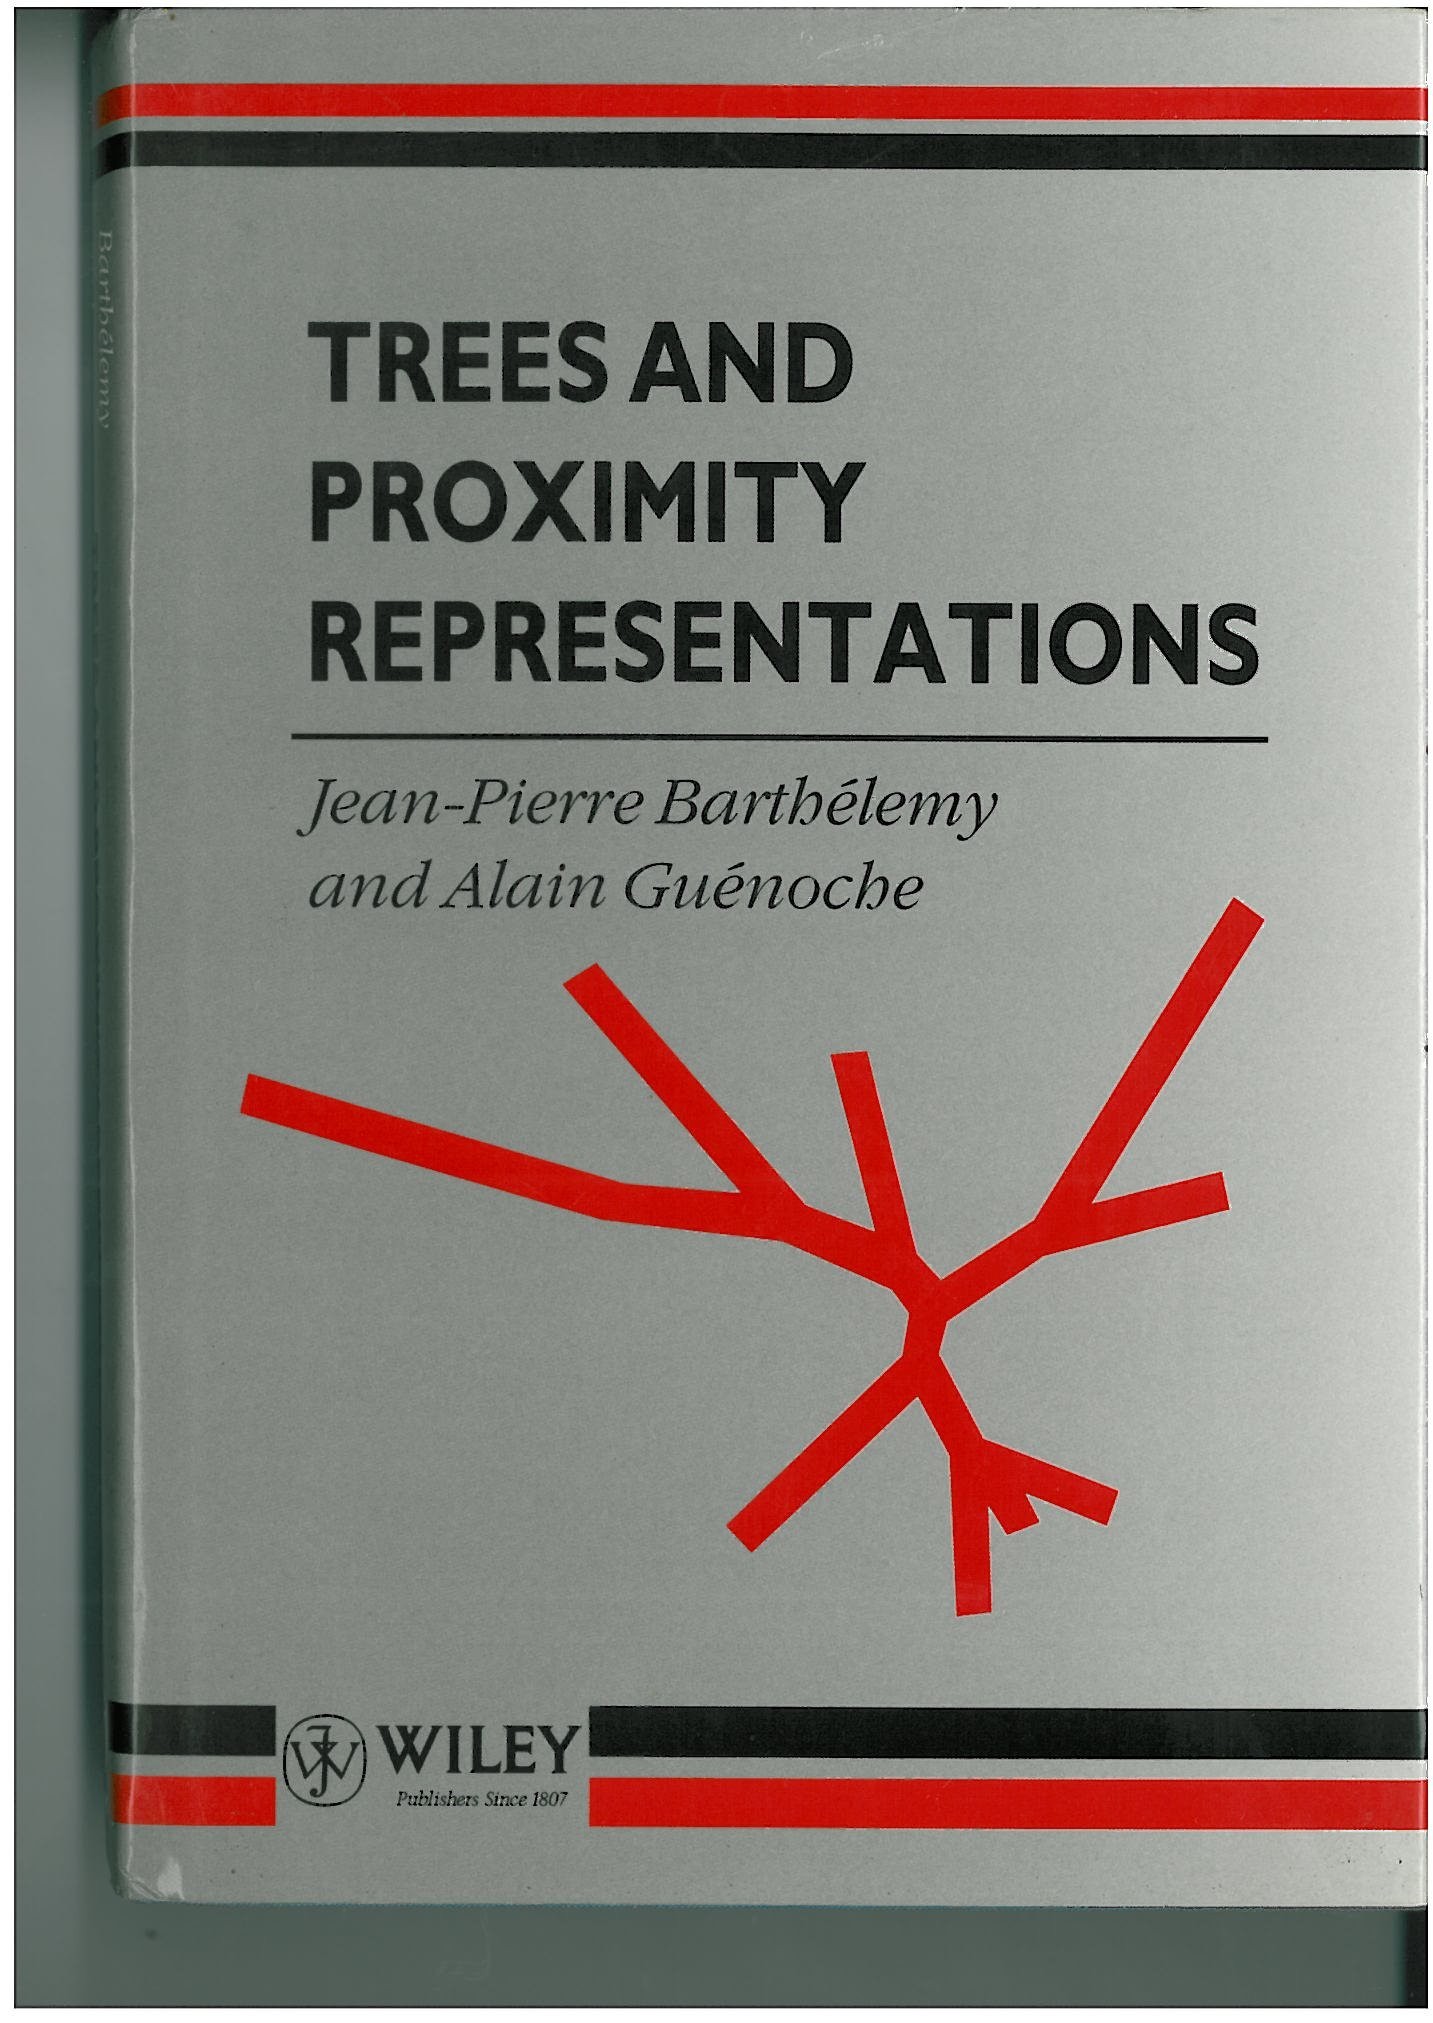 Trees and Proximity Representations